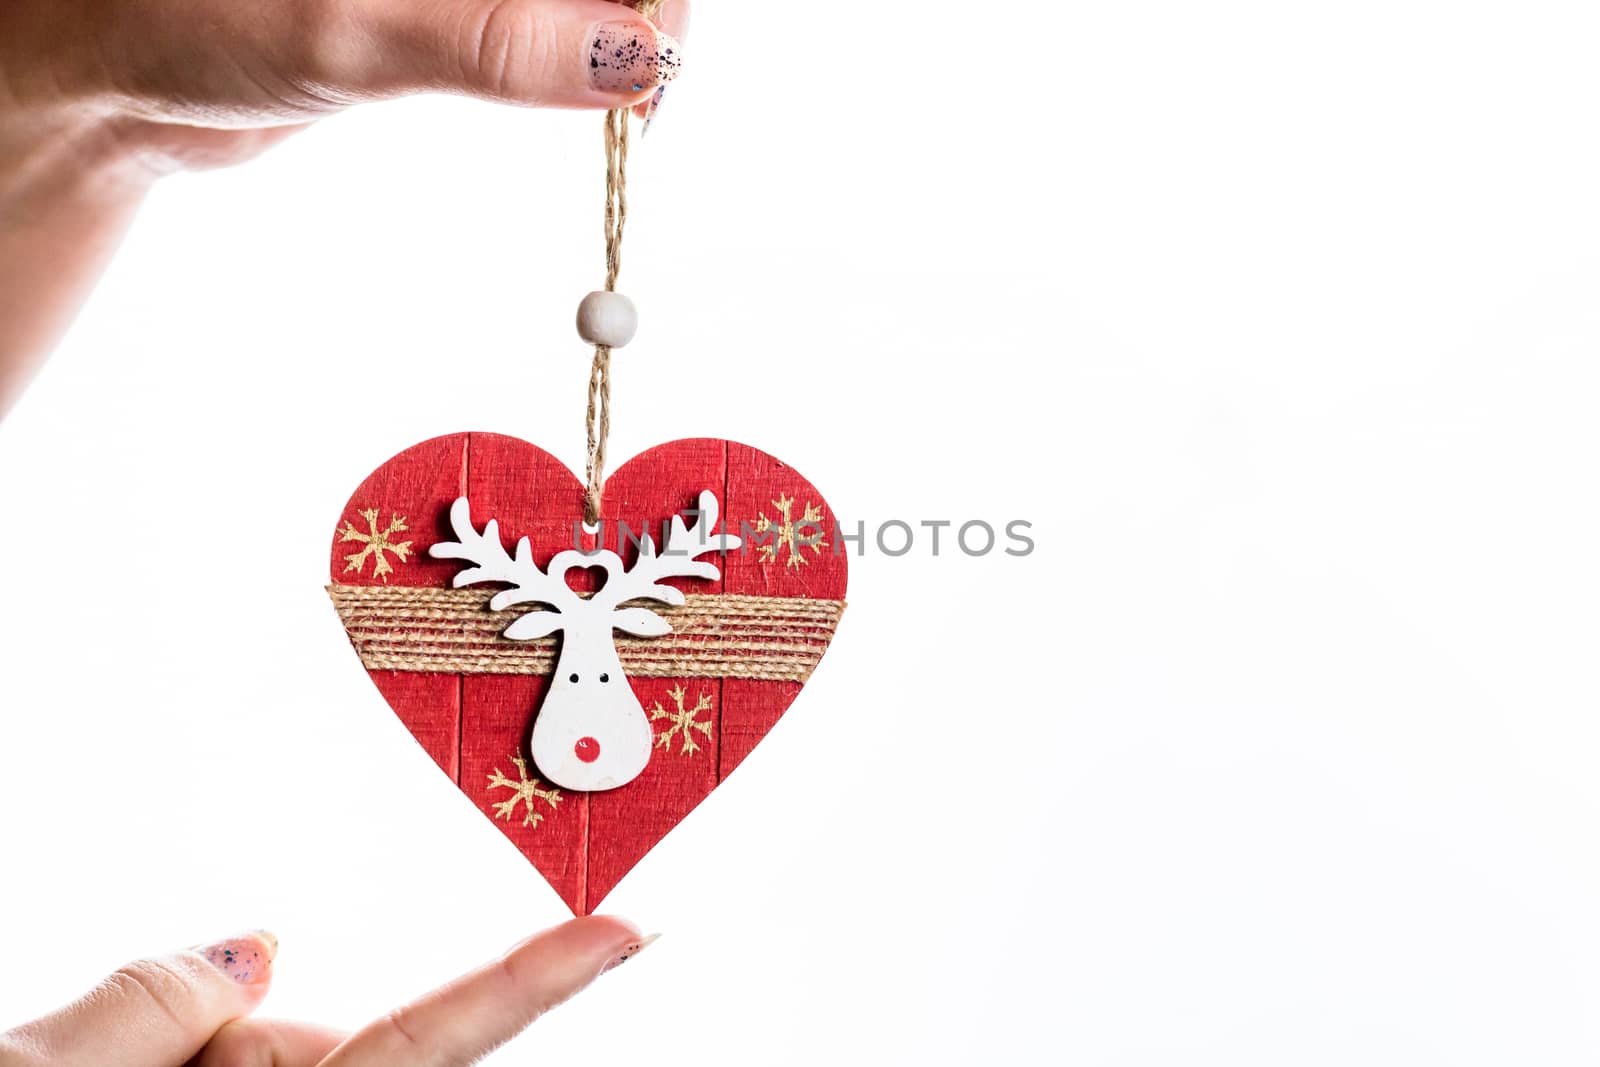 Hand holding heart shaped Christmas decoration isolated on white by vladispas